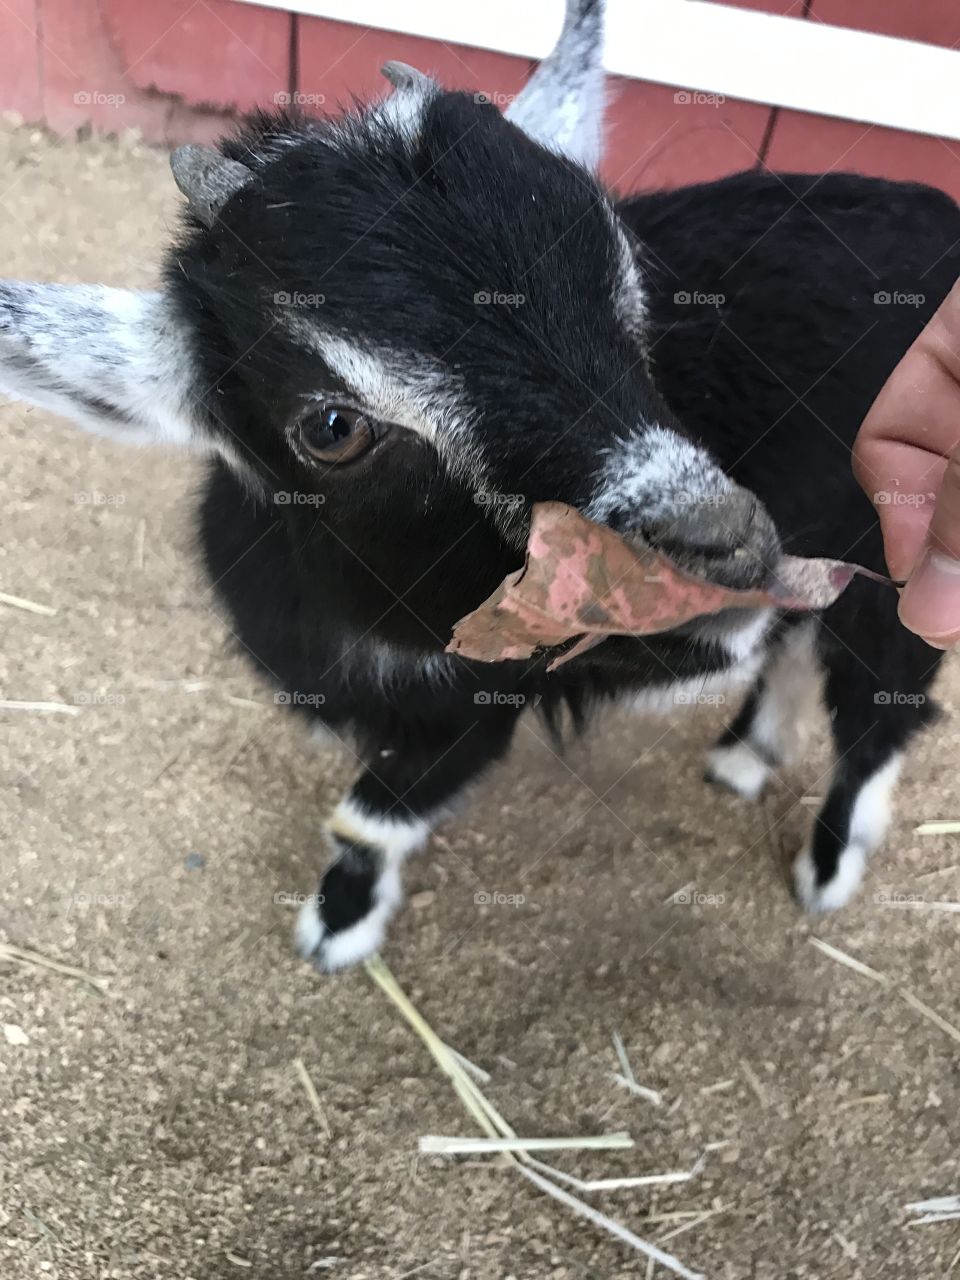 Goats love leaves!